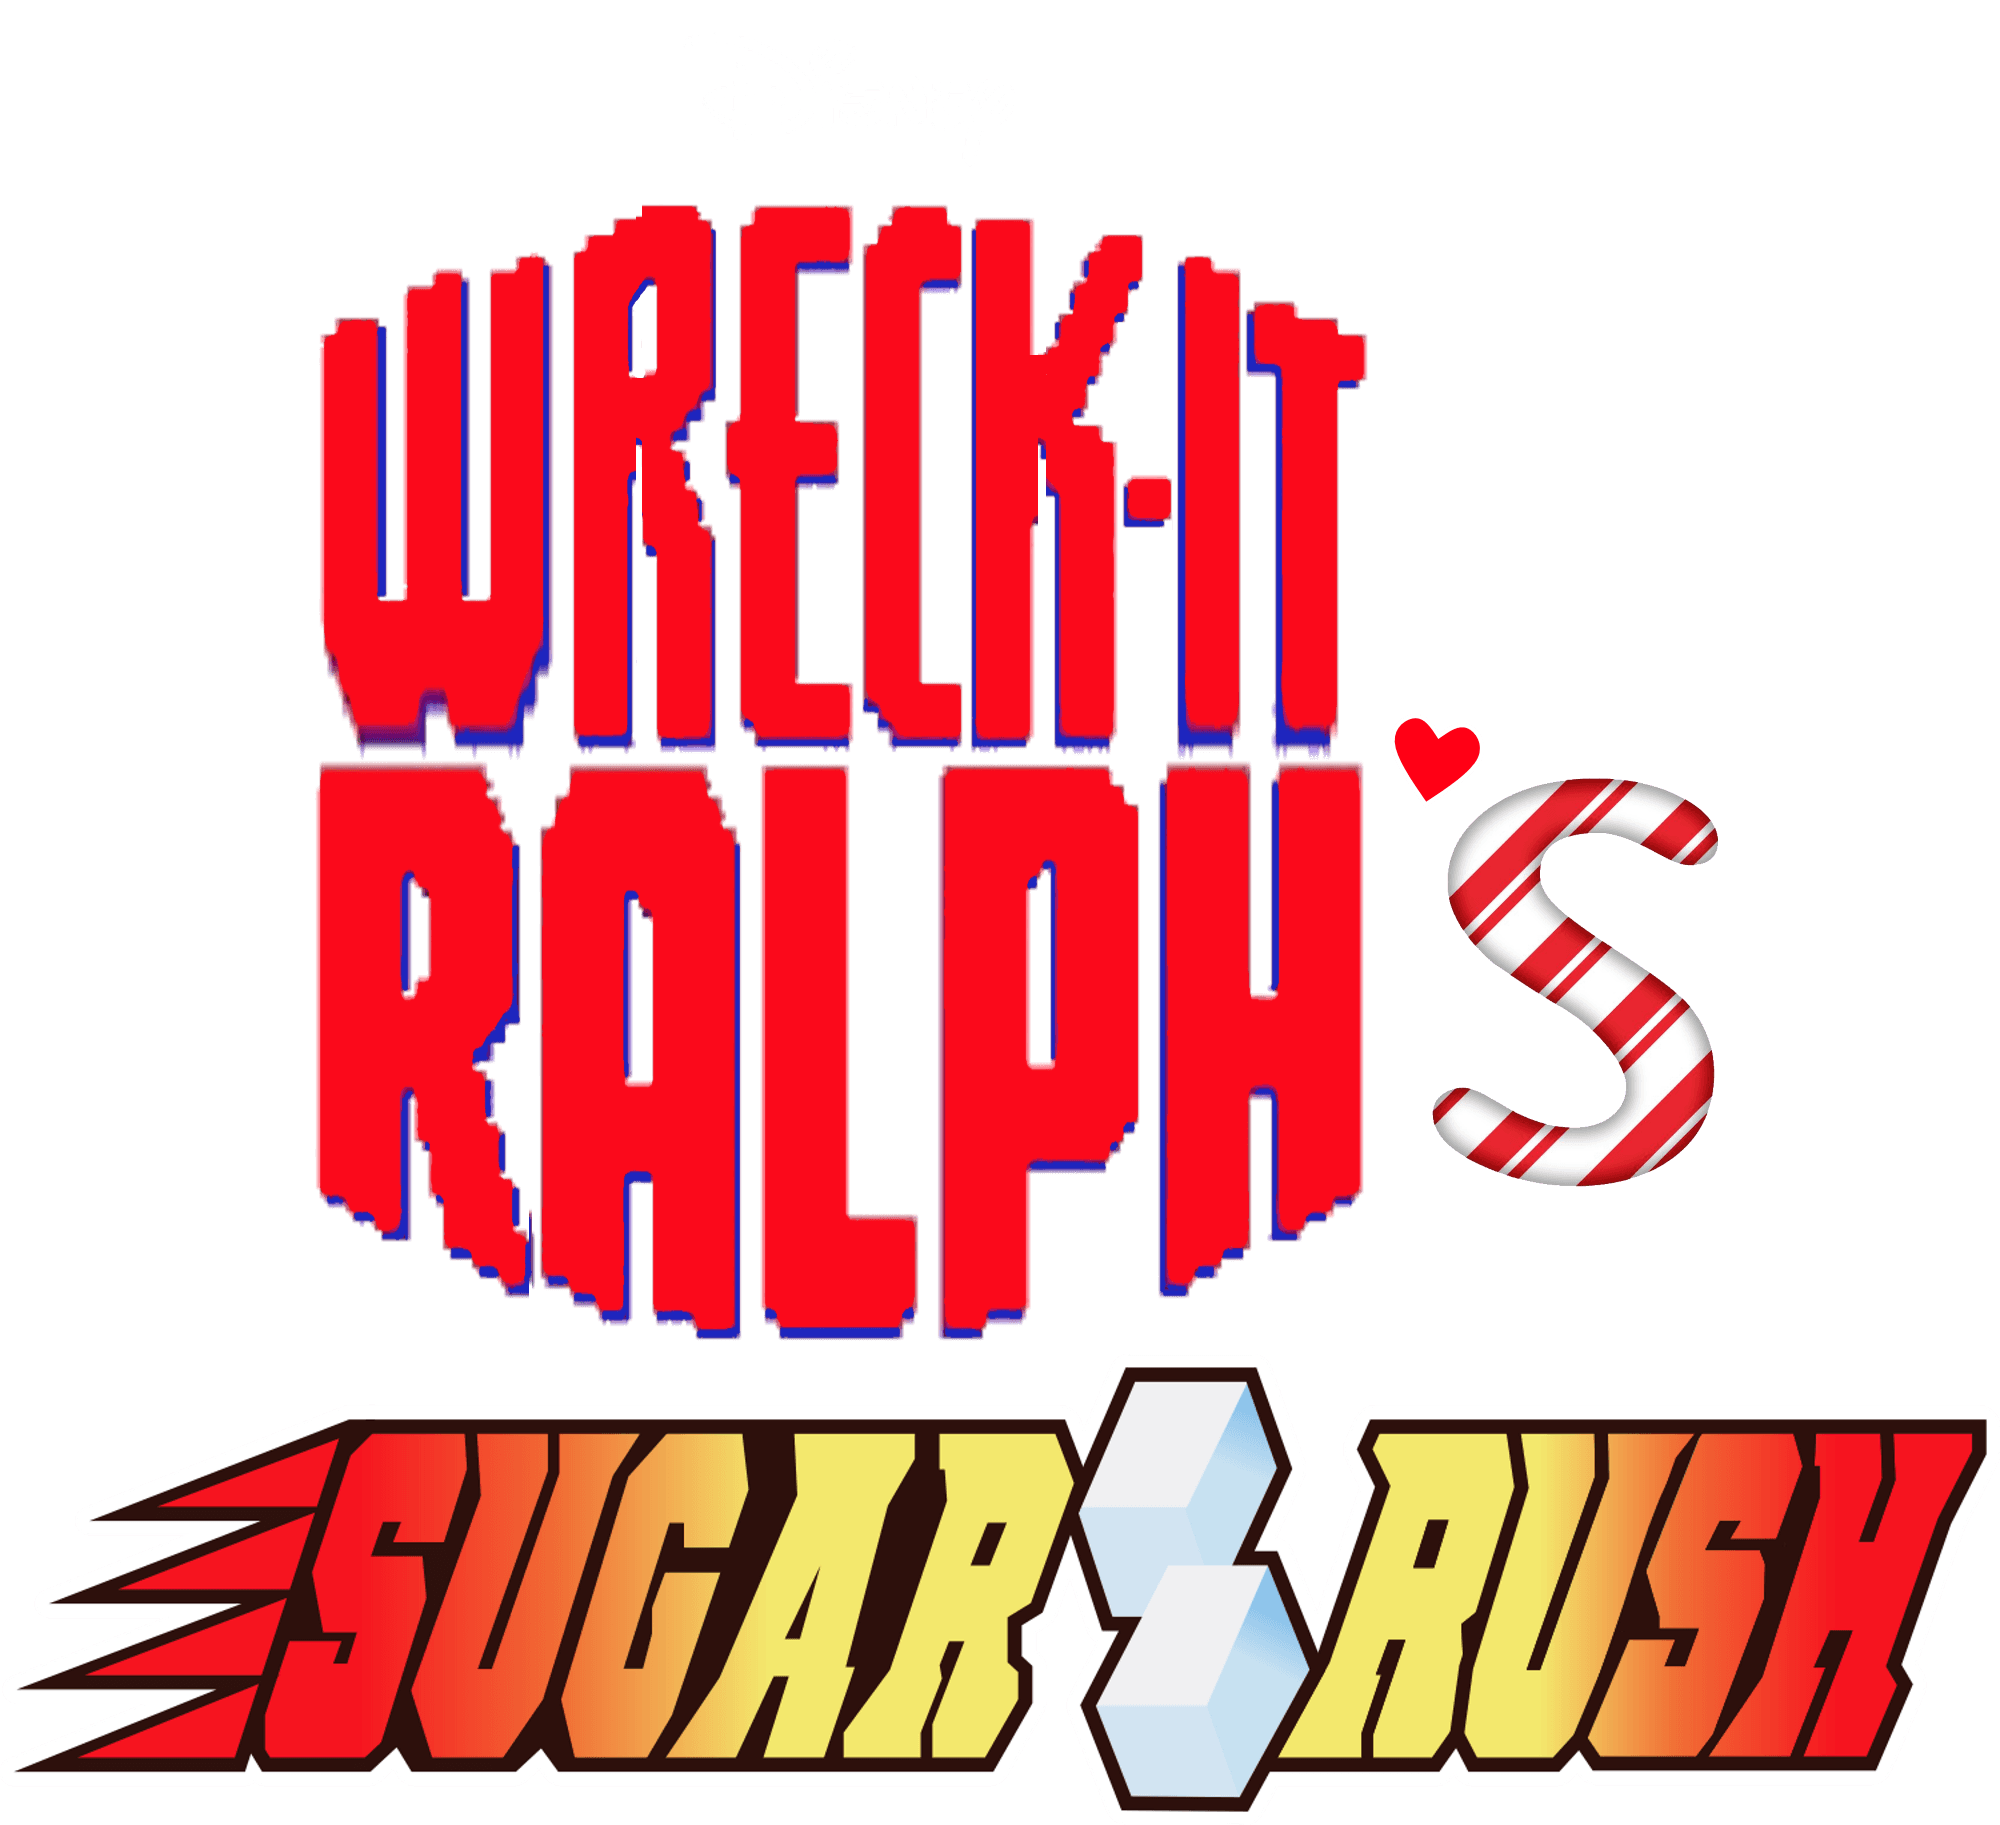 Wreck Logo - Wreck-It Ralph's Sugar Rush Logo - Wreck-It Ralph Photo (38391004 ...